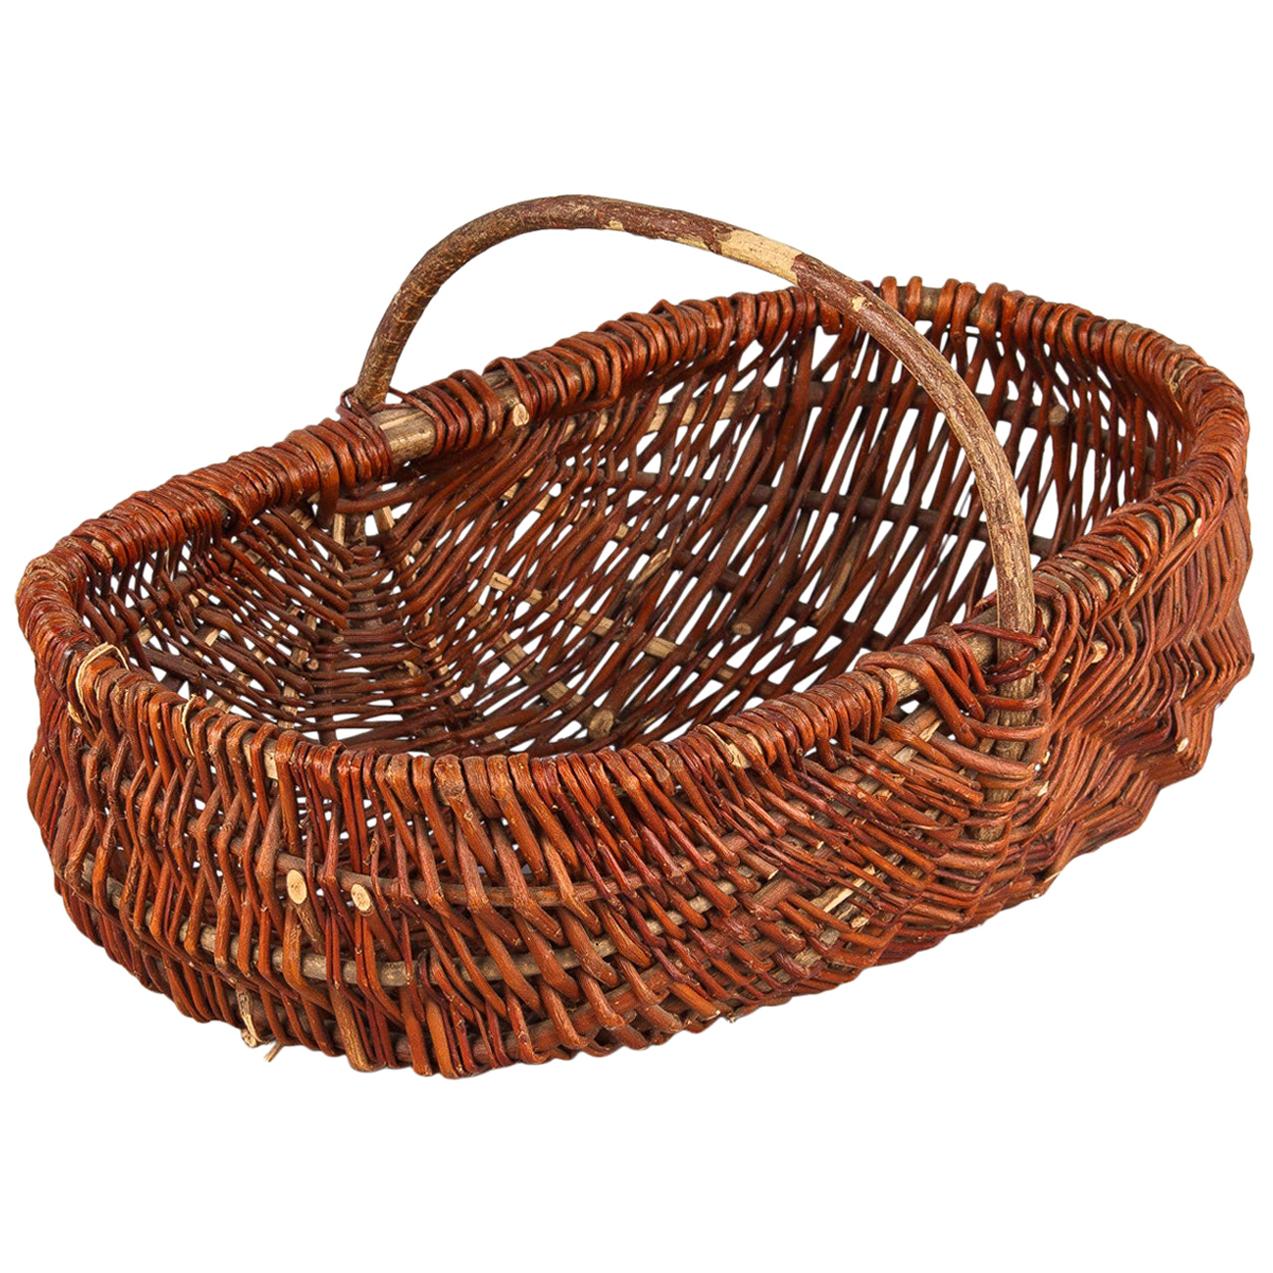 French Wicker Basket from Auvergne Region, 20th Century